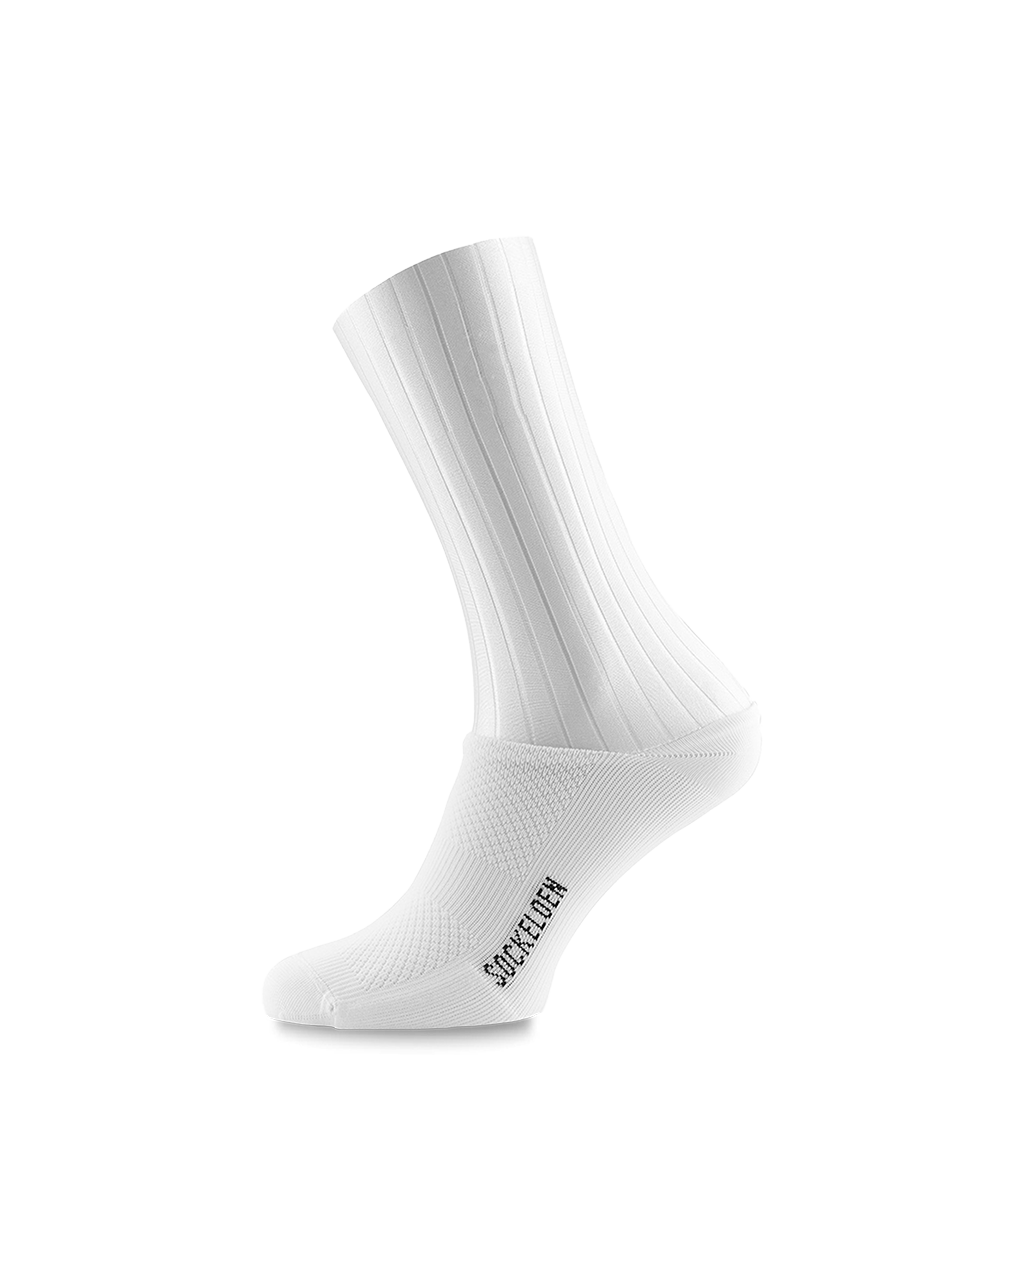 Allwhite-aero-cycling-socks-by-sockeloen